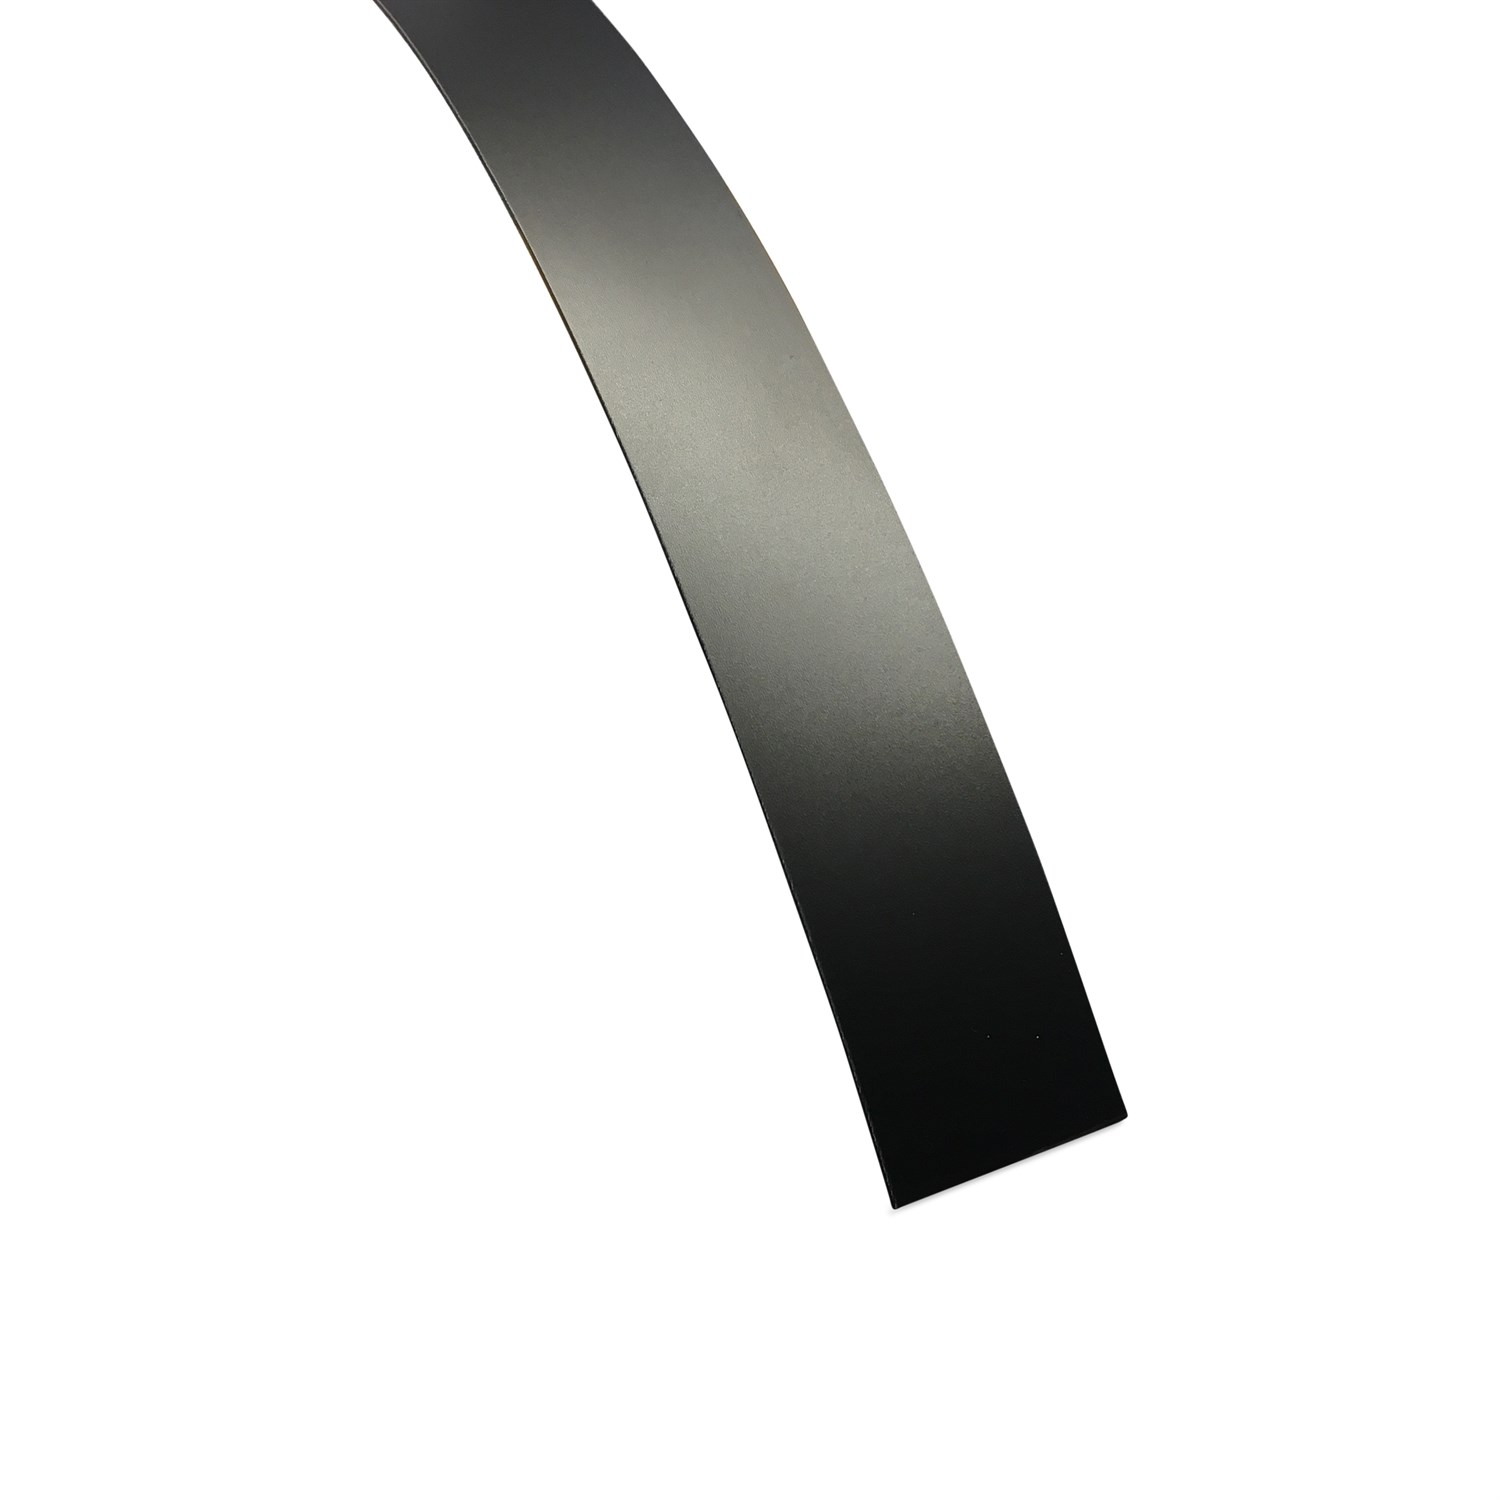 Zwarte gladde laminaat kantenband in 22mm breedte.